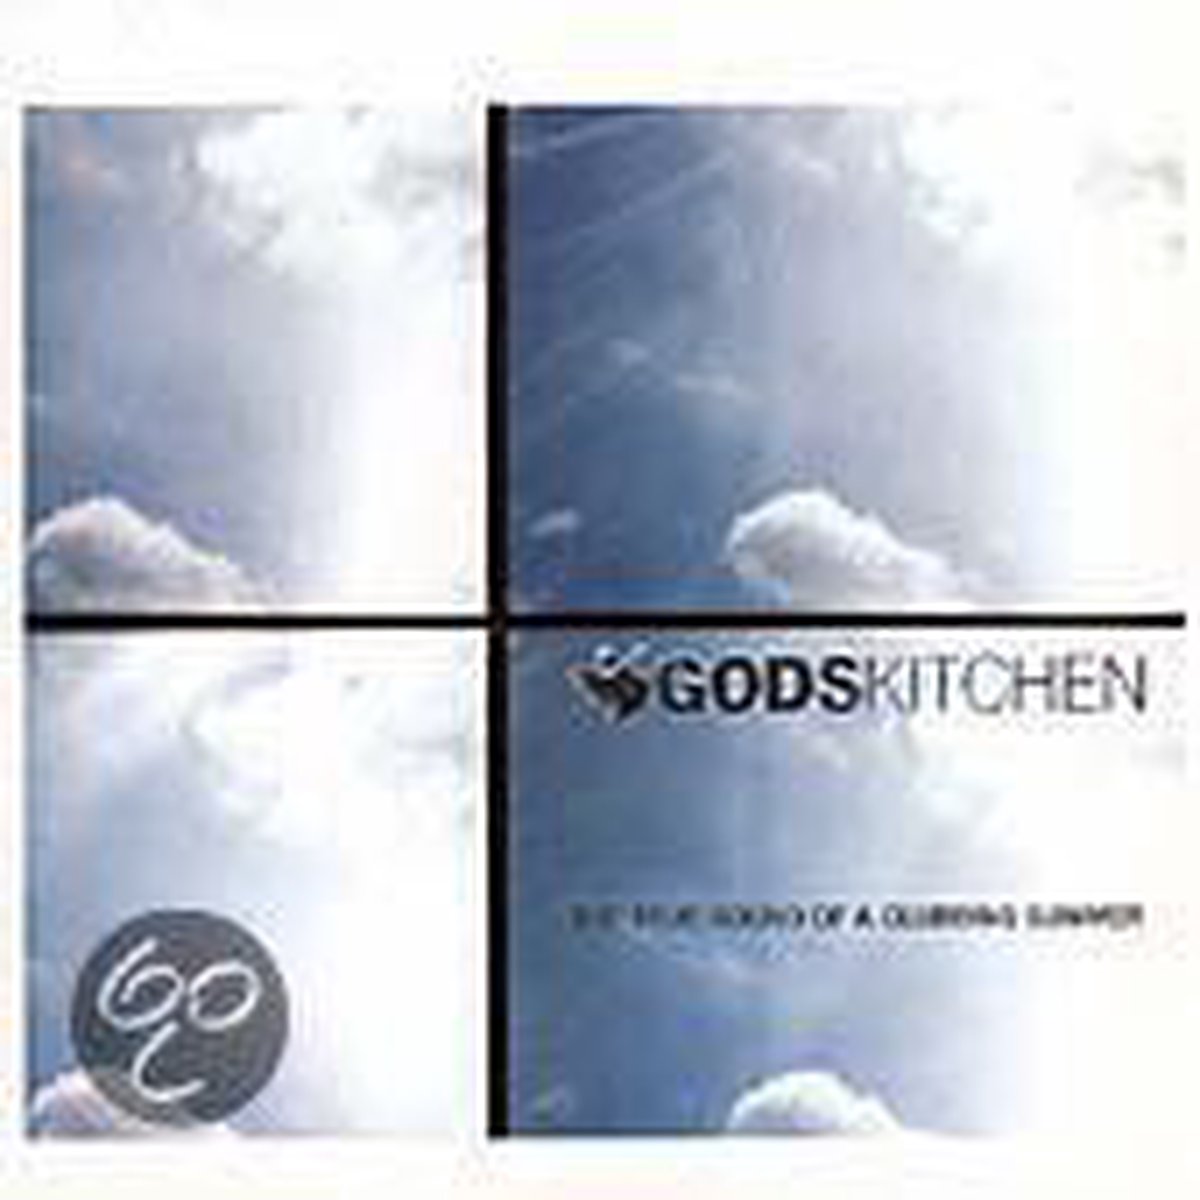 Godskitchen -The Album- - various artists